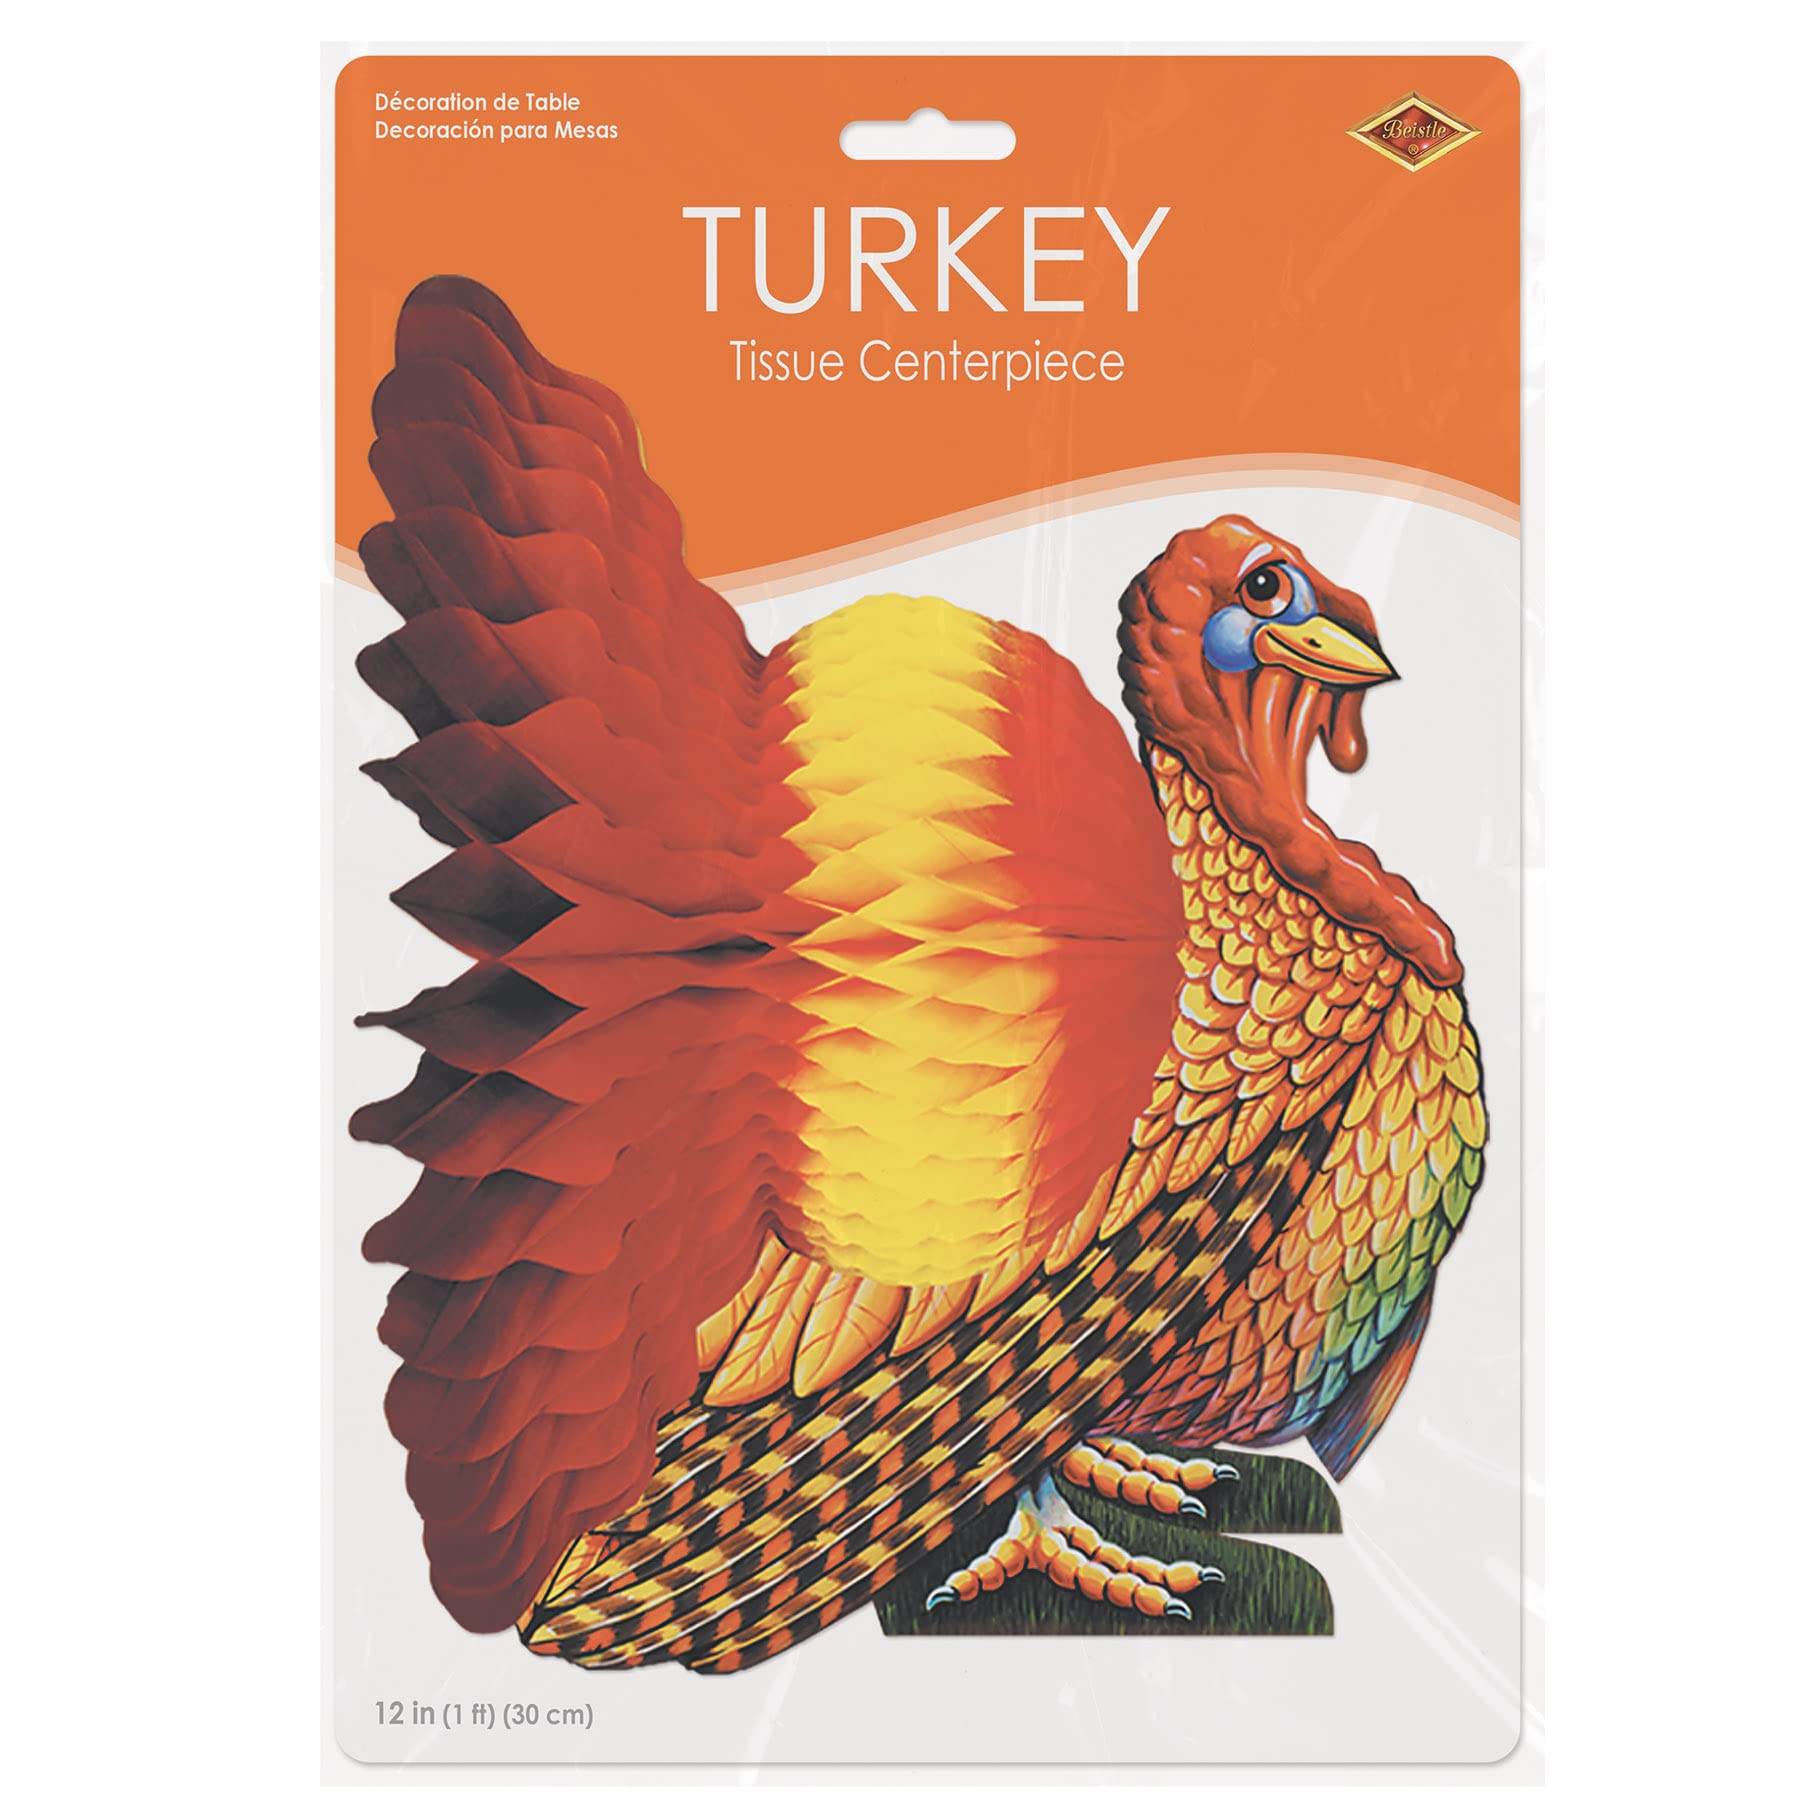 Beistle Tissue Paper Turkey Centerpiece For Thanksgiving Party Decoration Autumn Fall Harvest Home Decor